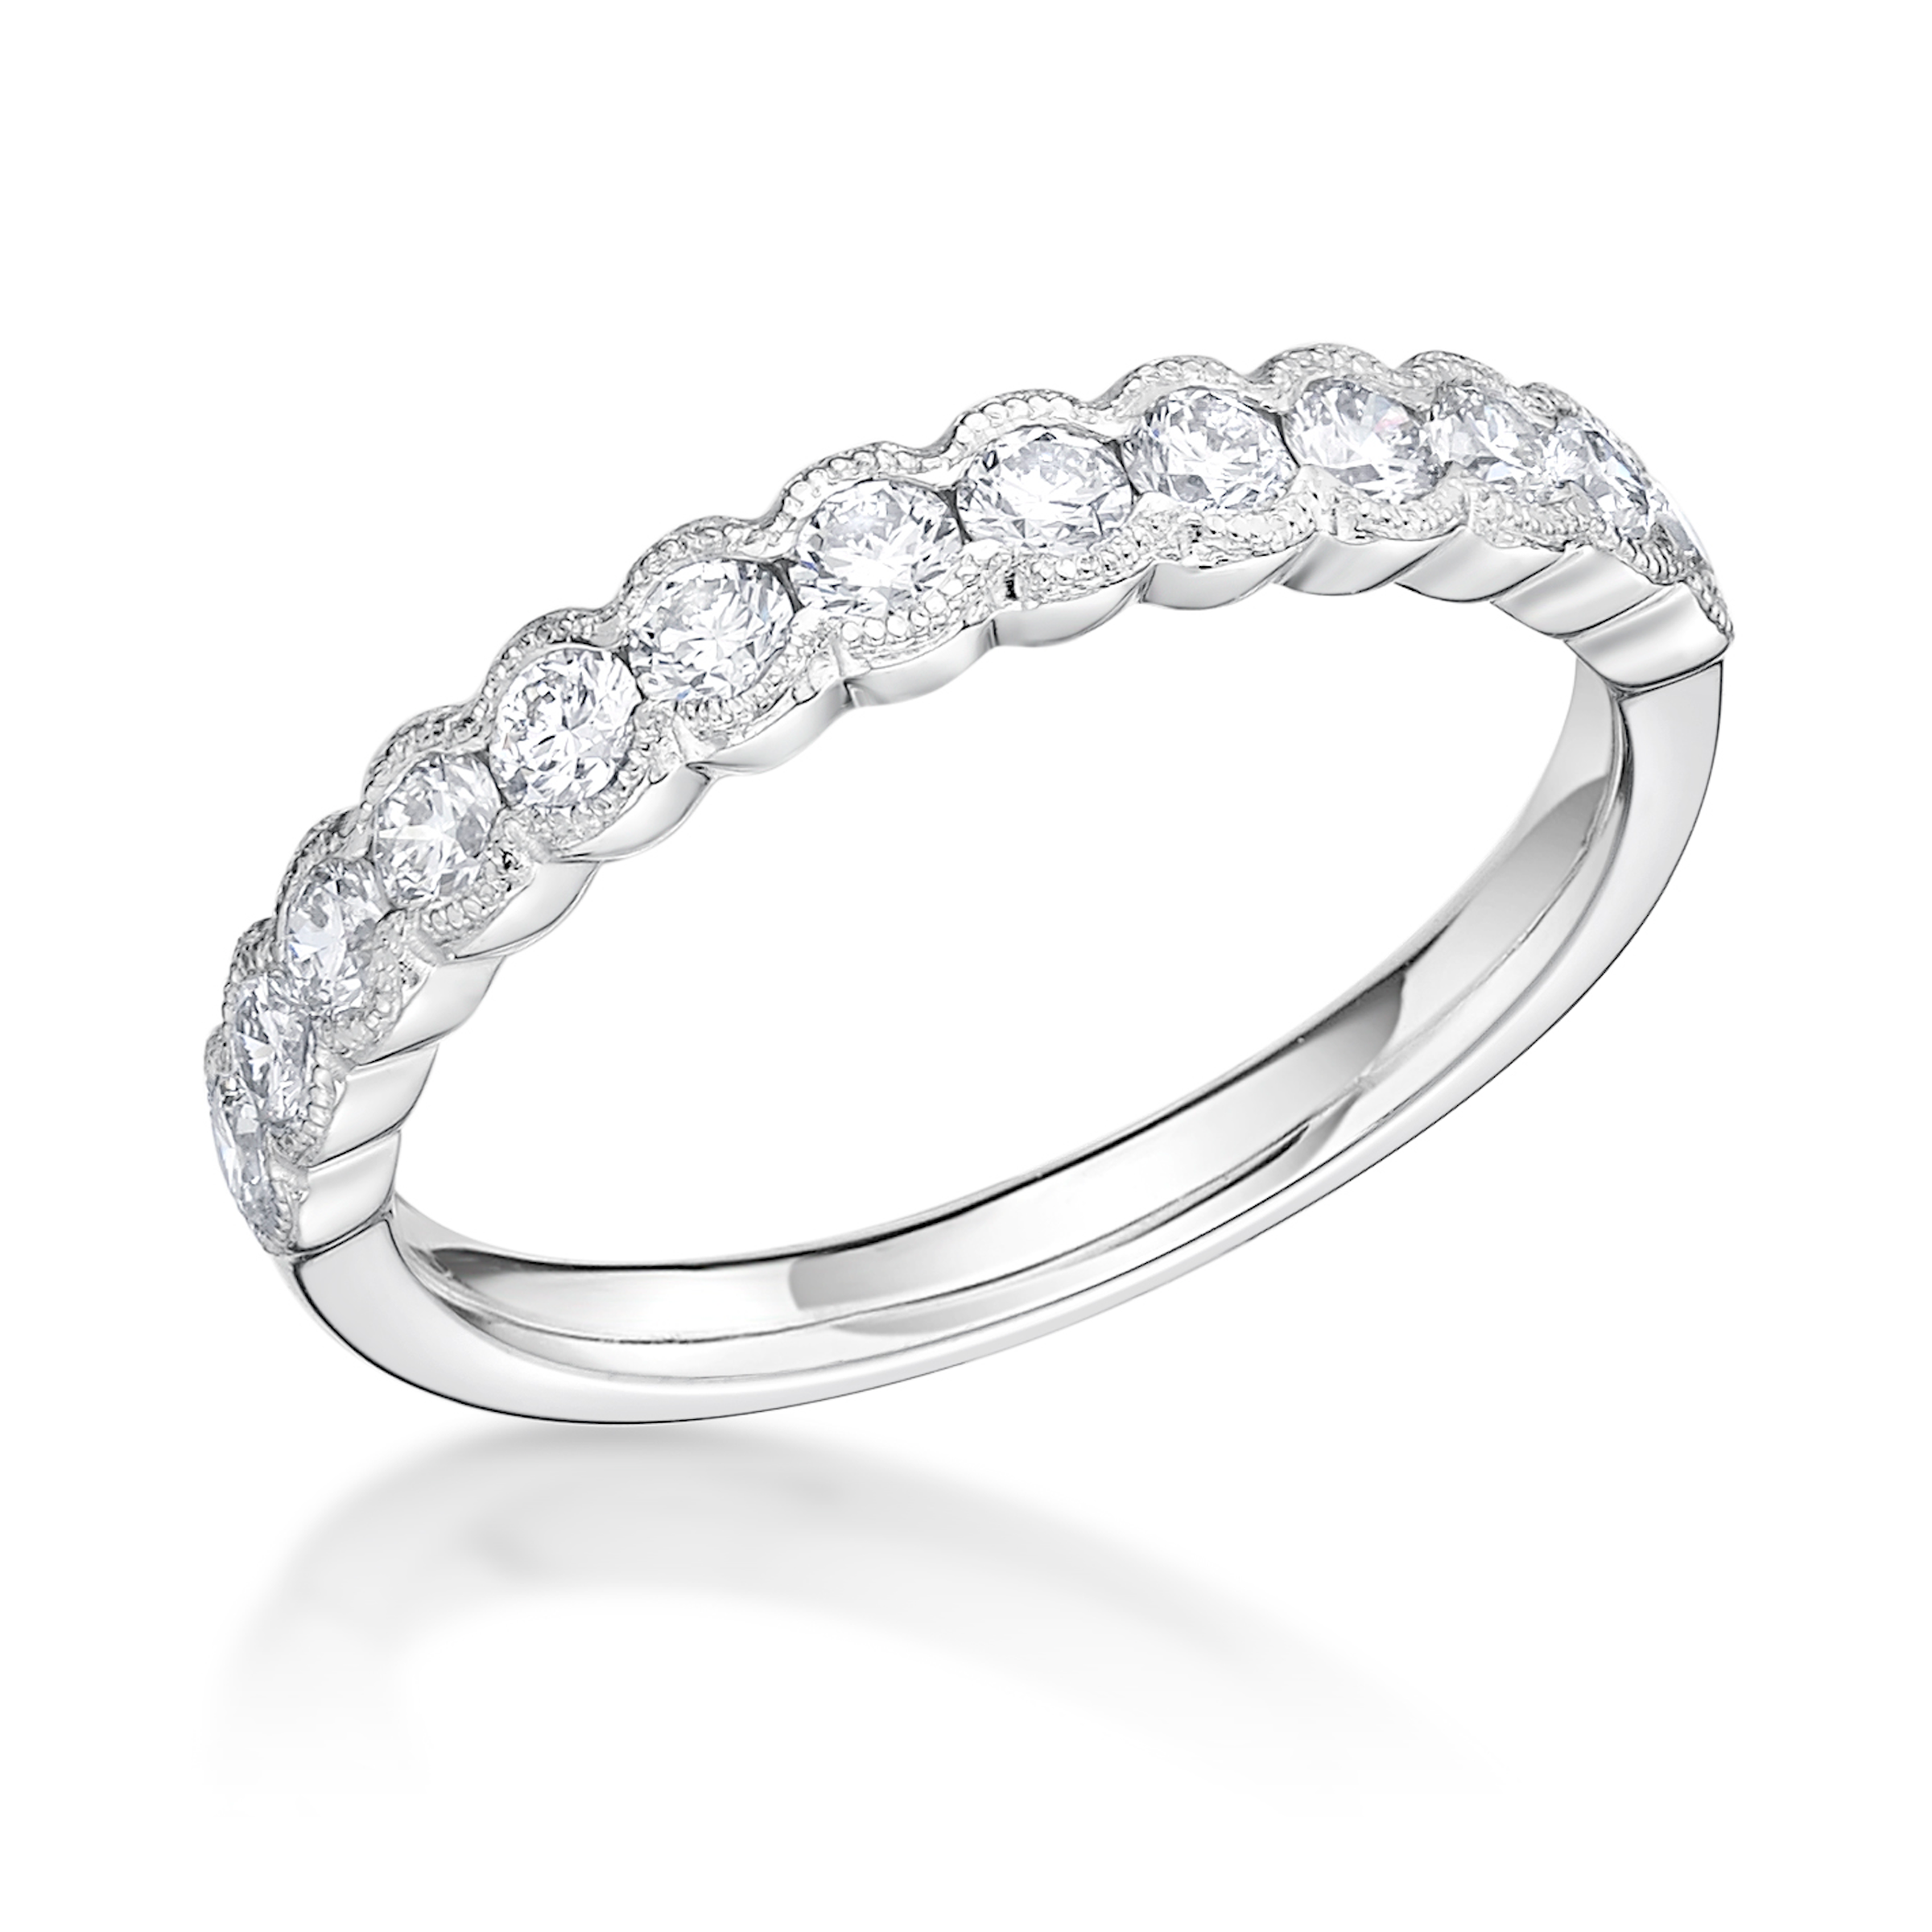 VINTAGE INSPIRED ROUND BRILLIANT DIAMOND SET WEDDING ETERNITY RING